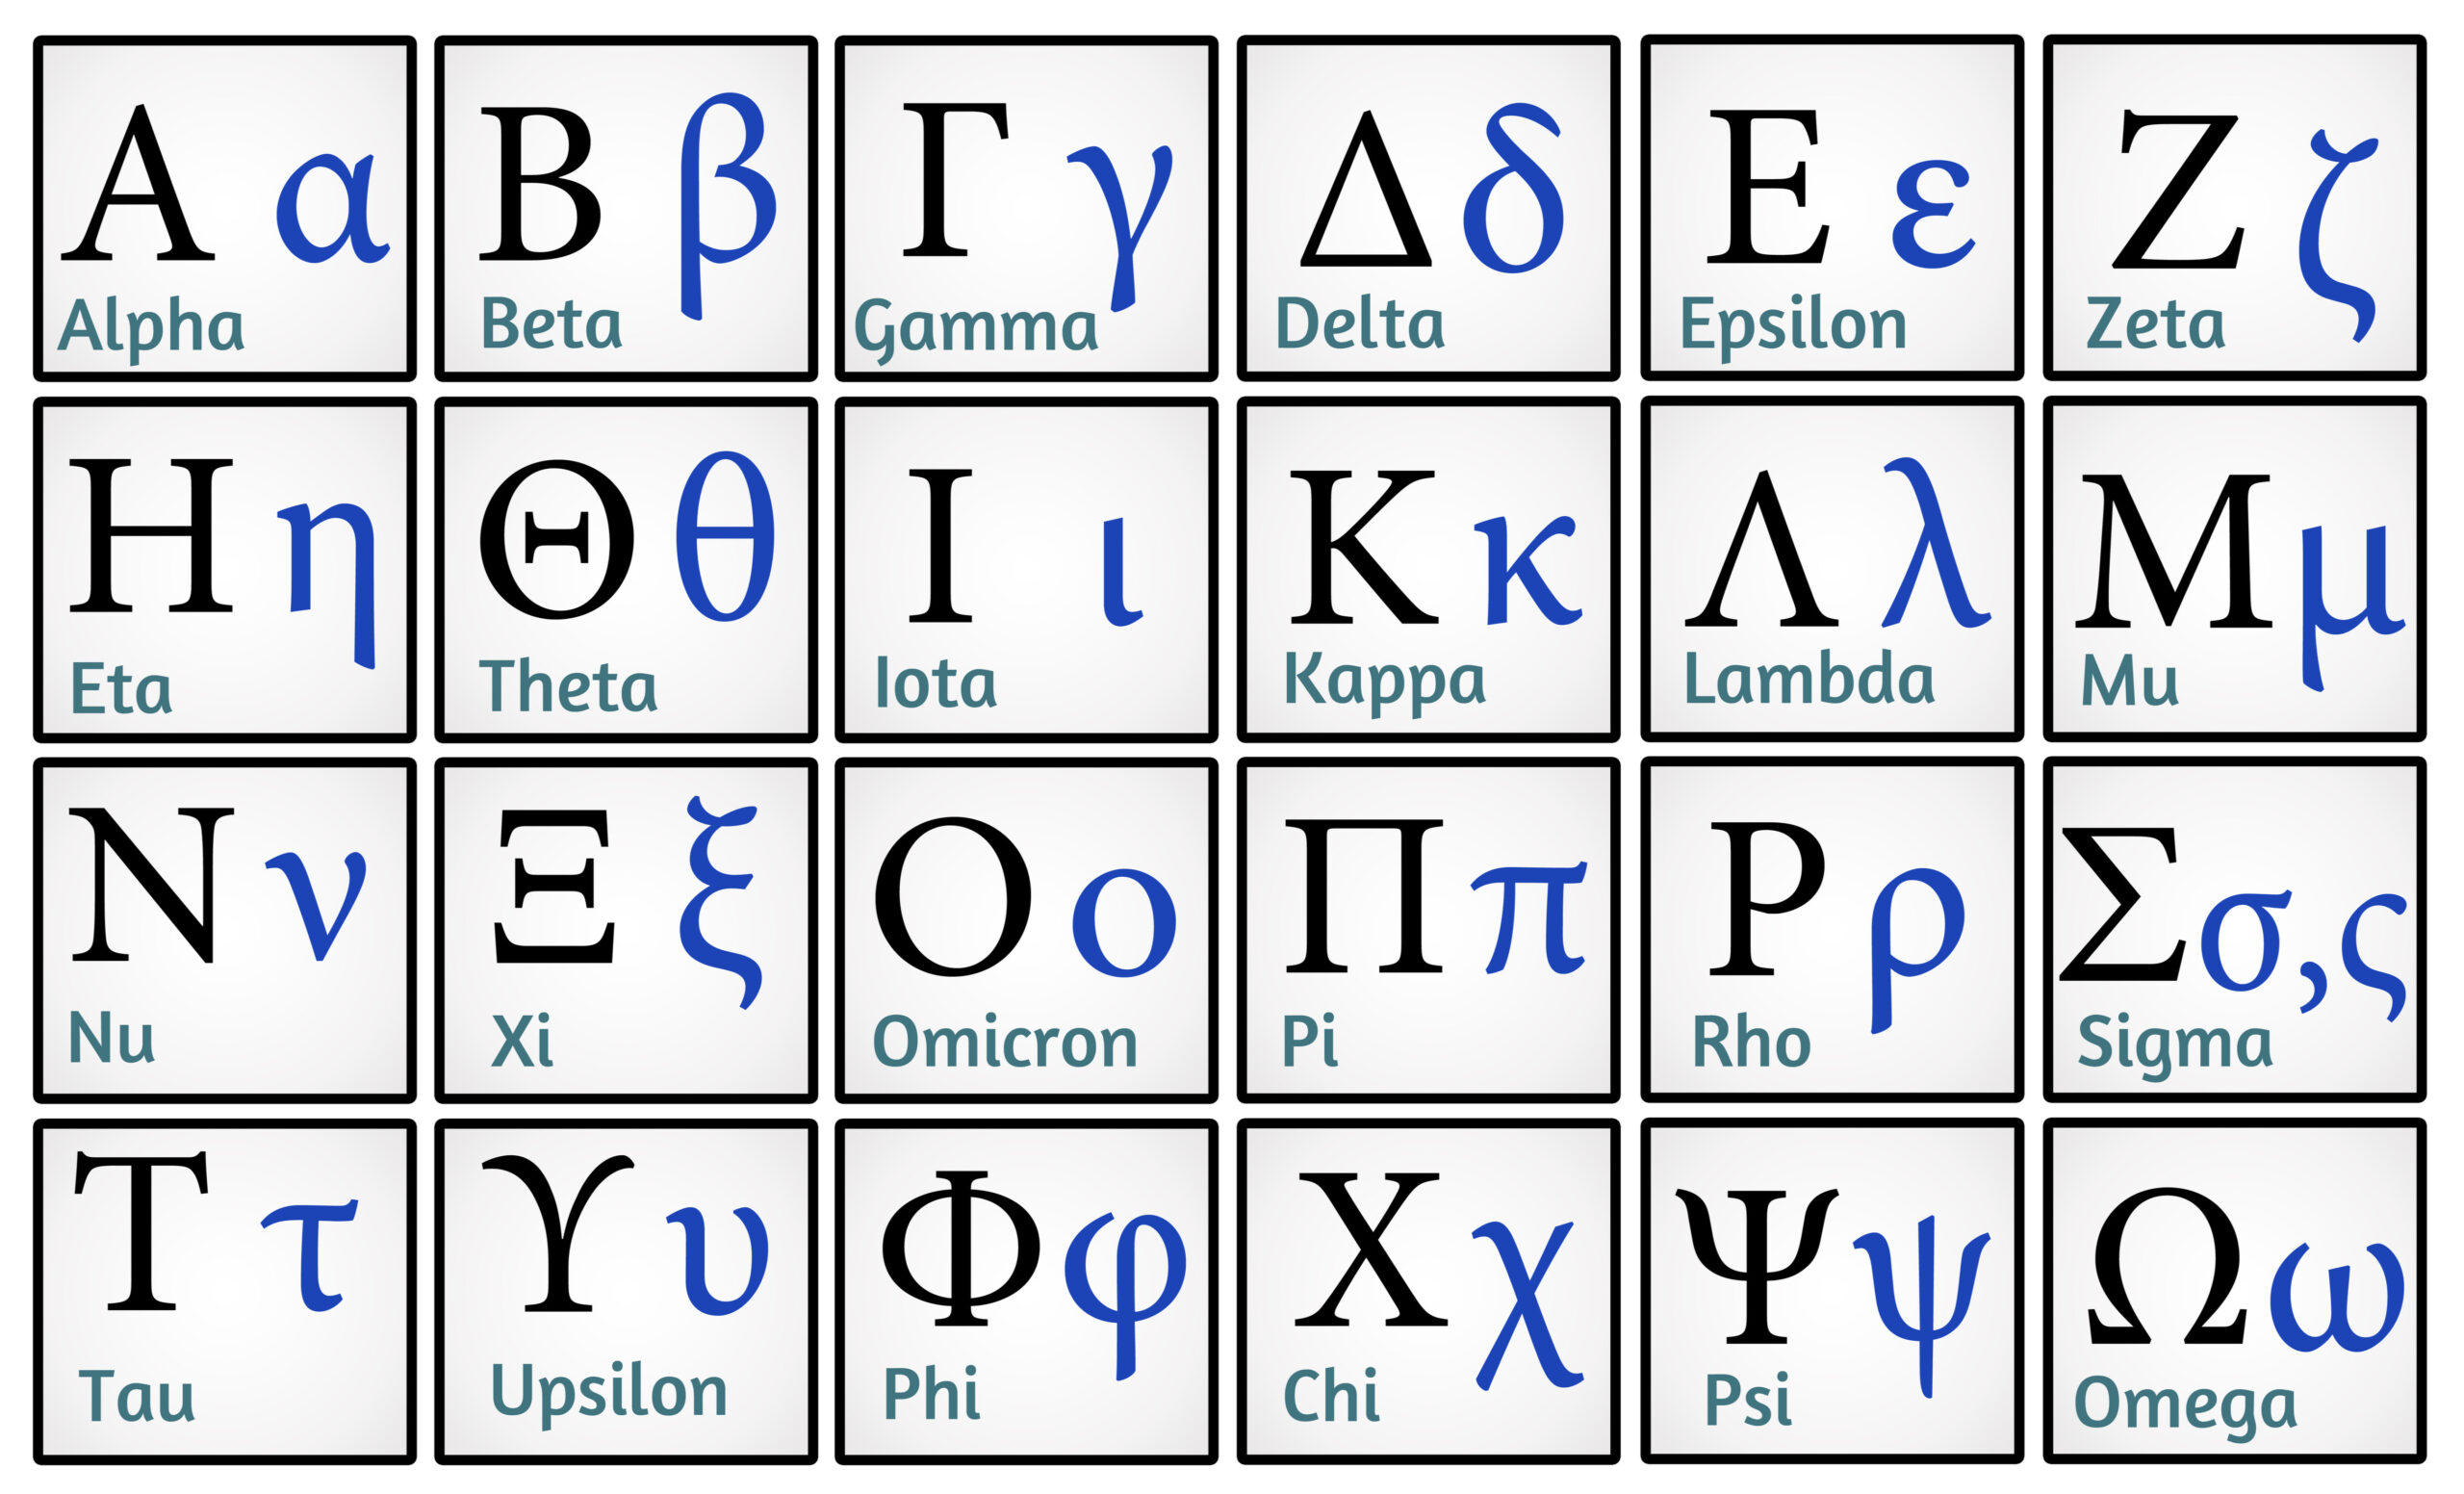 History Greek Alphabet Level 1 Activity For Kids PrimaryLeap co uk